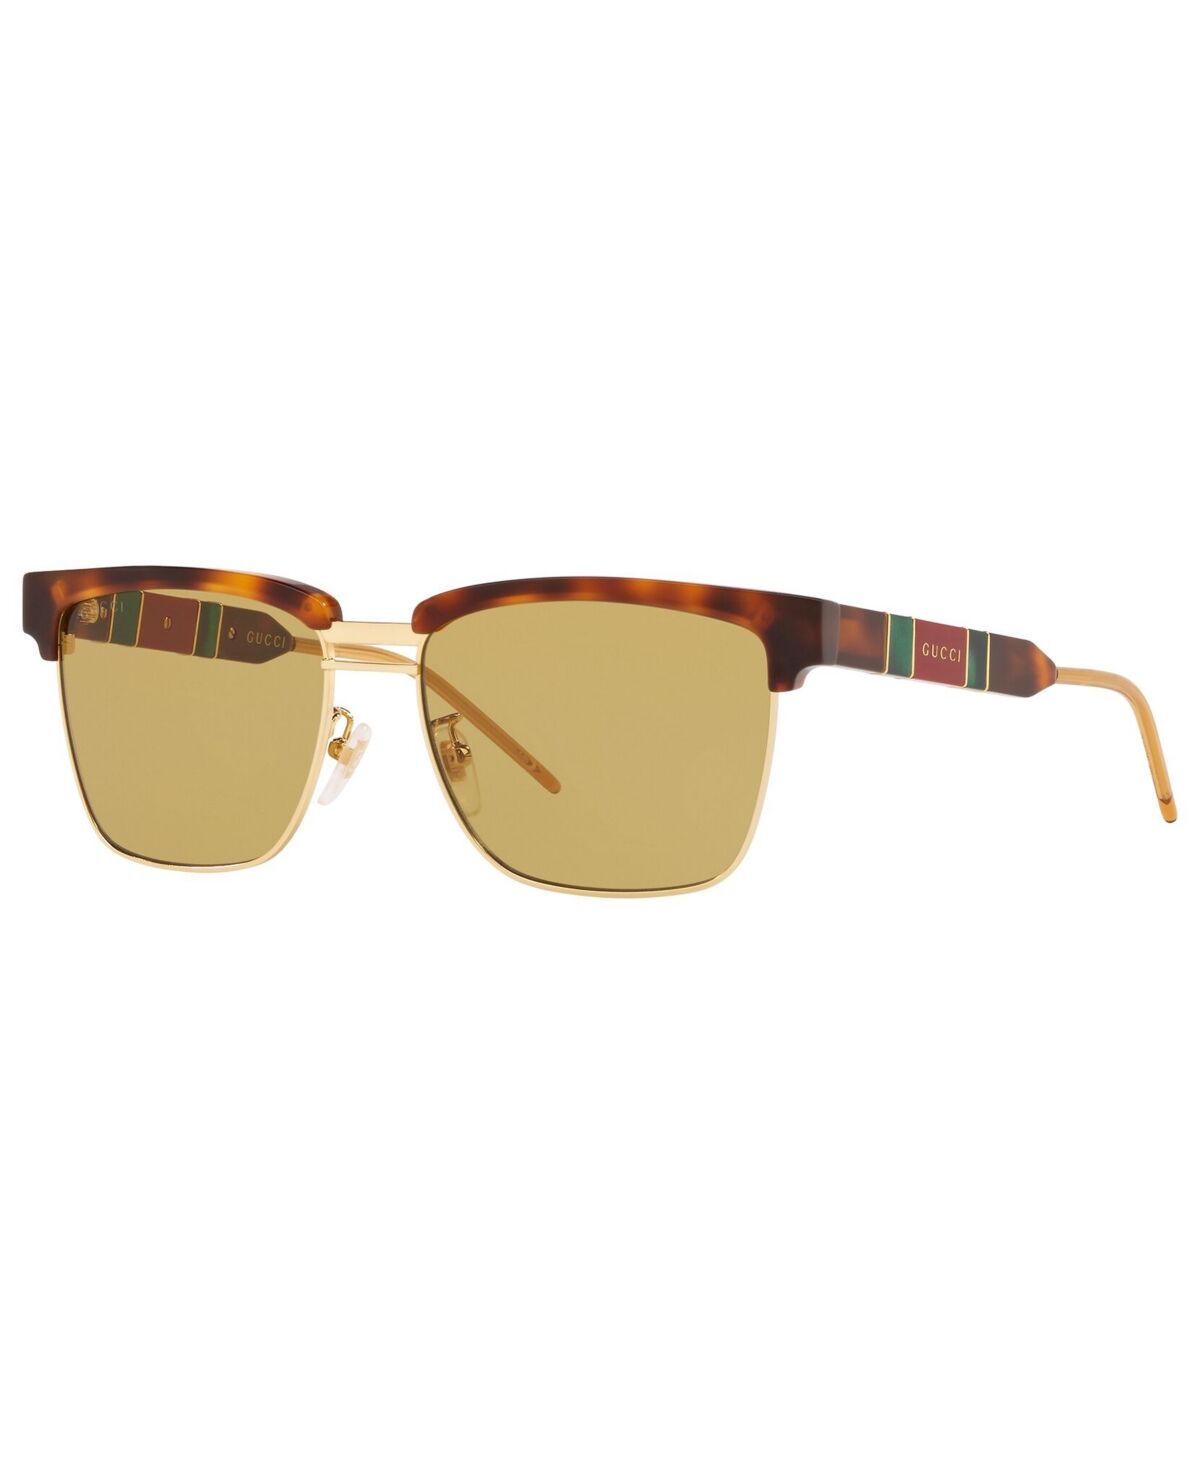 Gucci Men's Sunglasses, GC001342 - TORTOISE/YELLOW